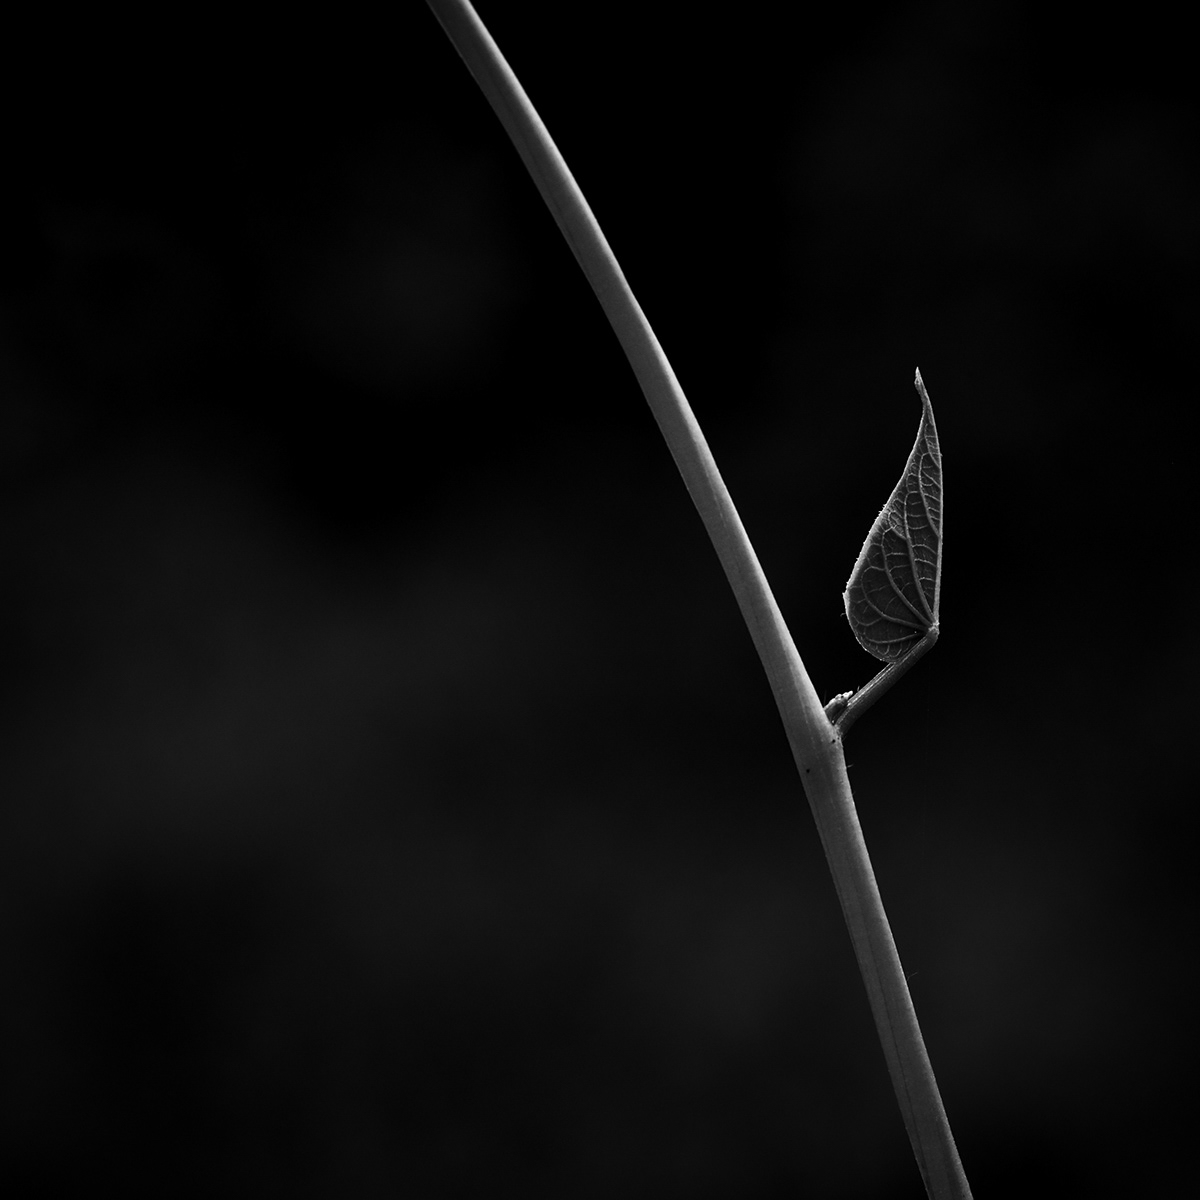 plants Macro Photography black and white abstract minimal fine art wild plants